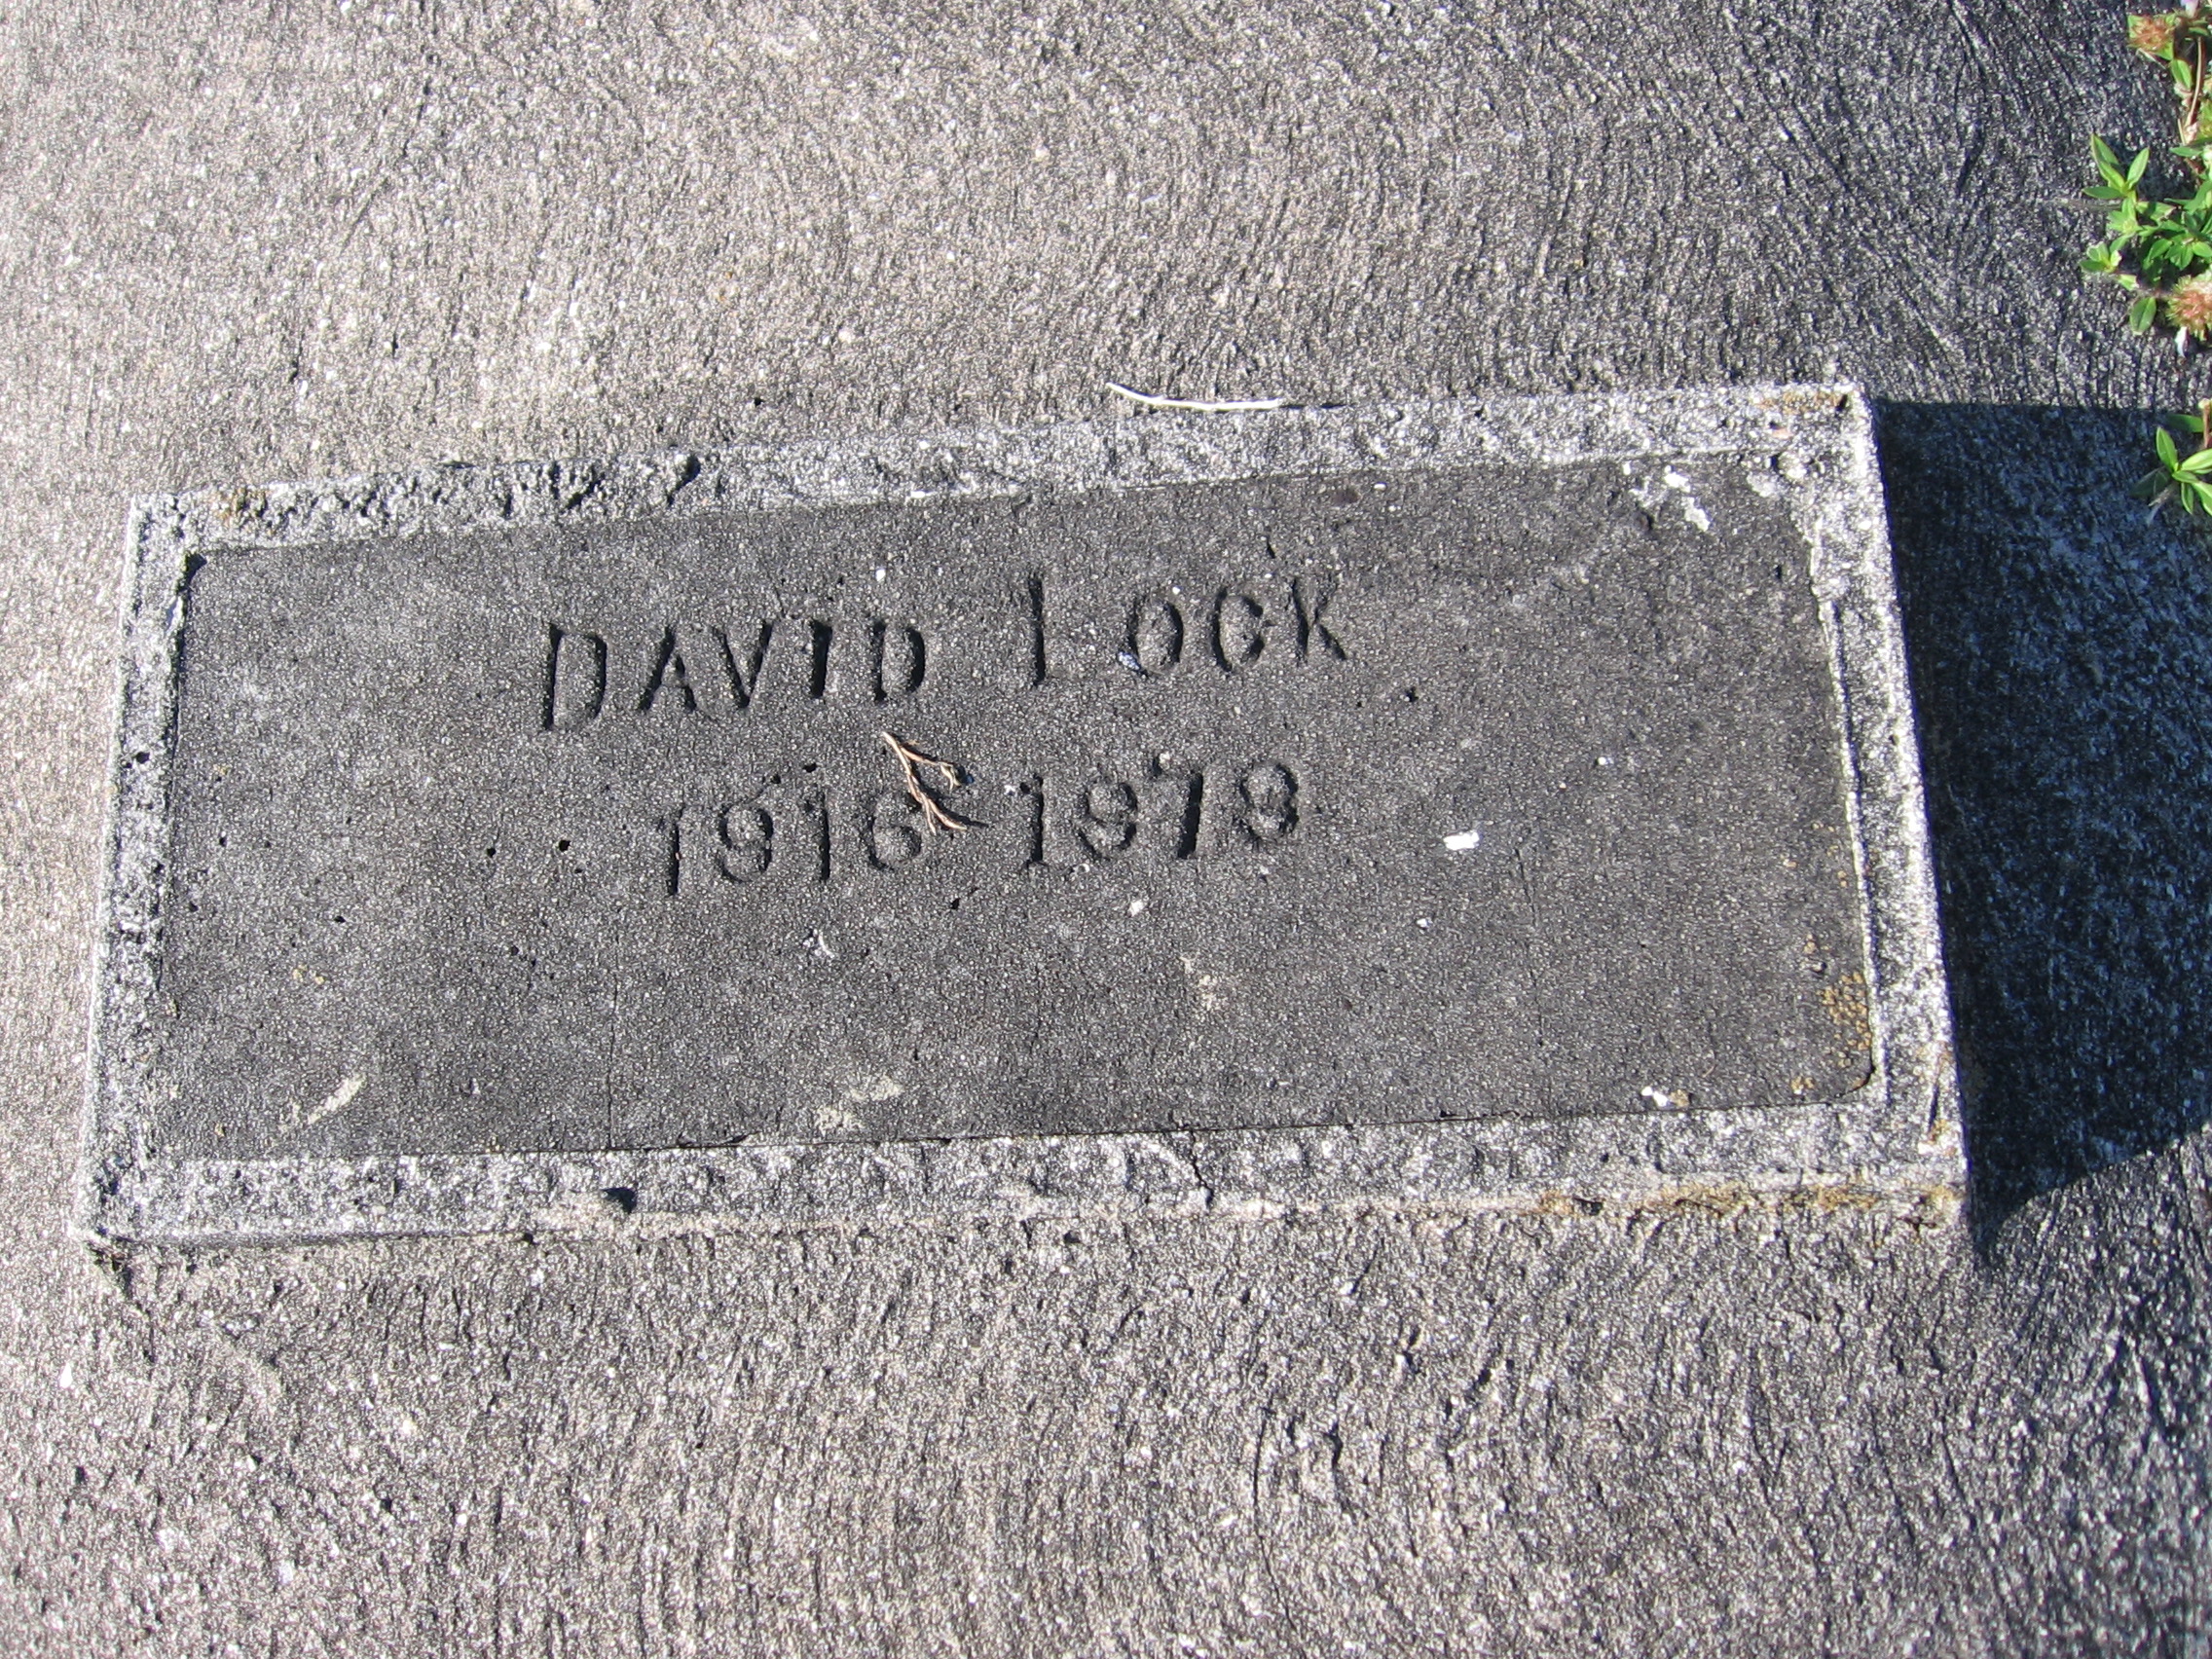 David Lock